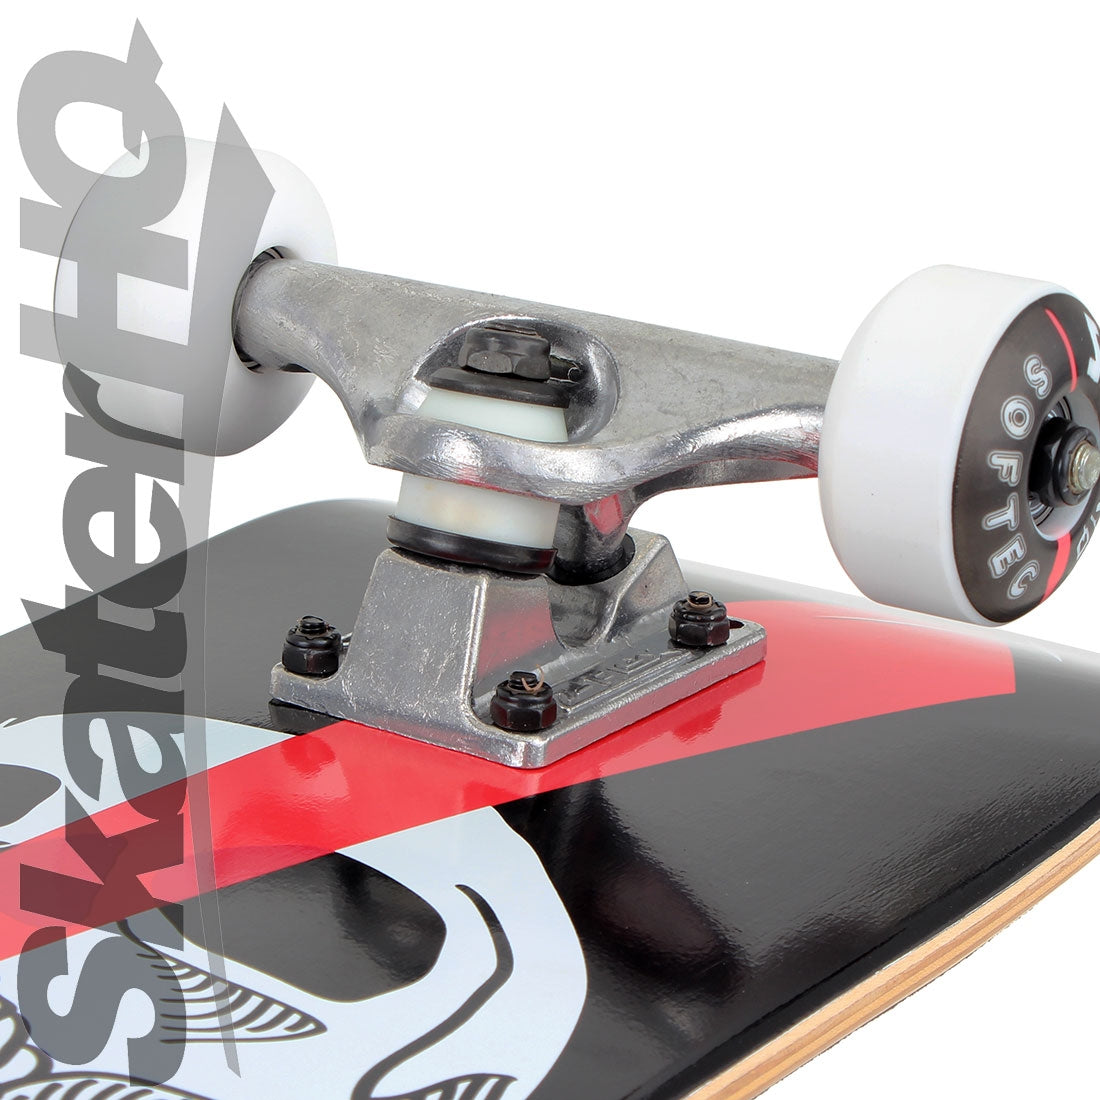 Skater HQ Skull and Swoosh 7.25 Mini S Complete Skateboard Completes Modern Street